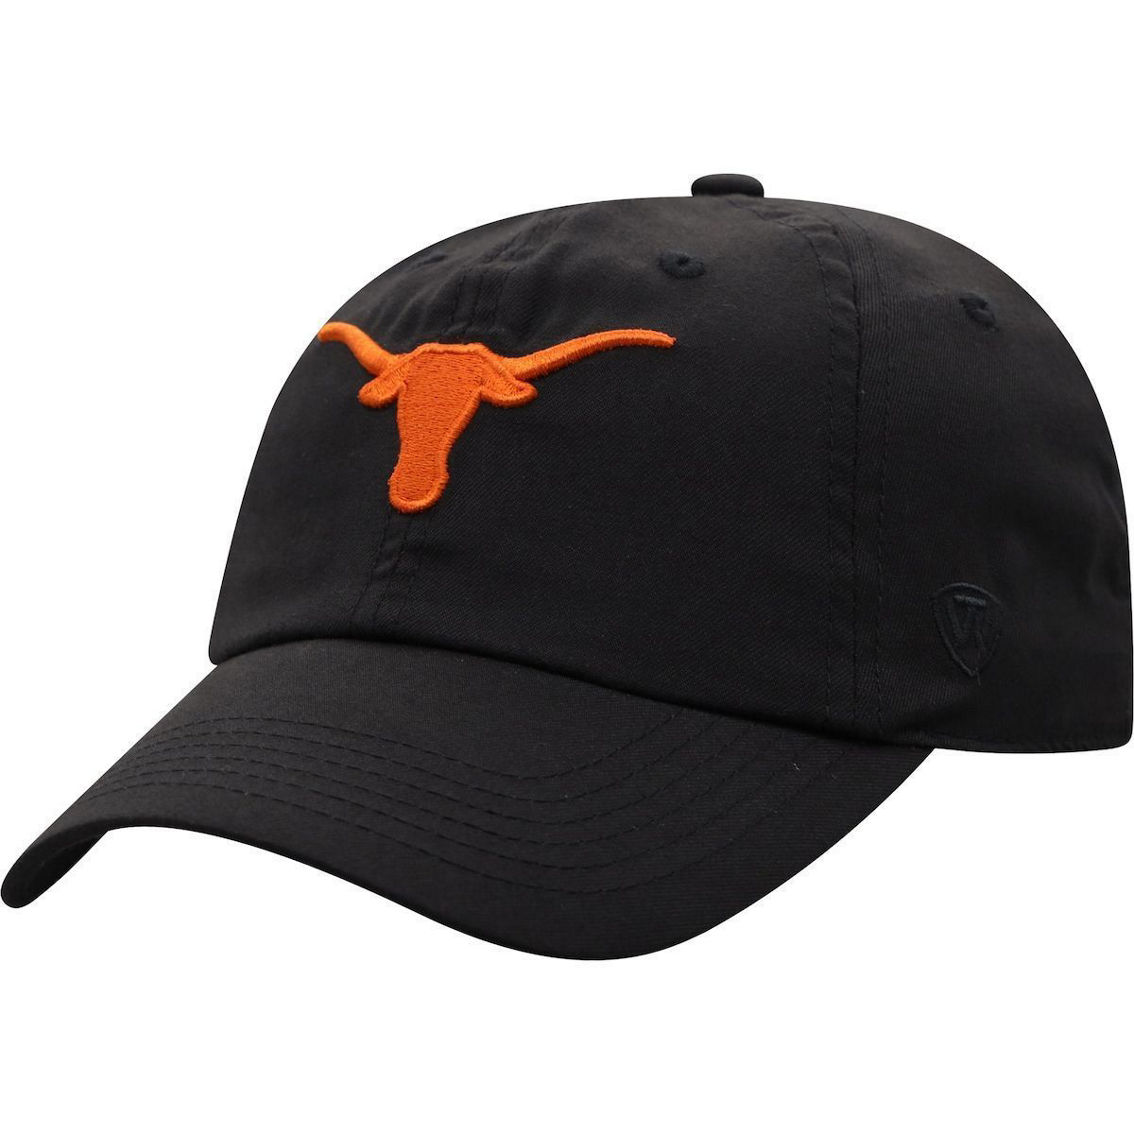 Top of the World Men's Black Texas Longhorns Adjustable Hat - Image 2 of 4